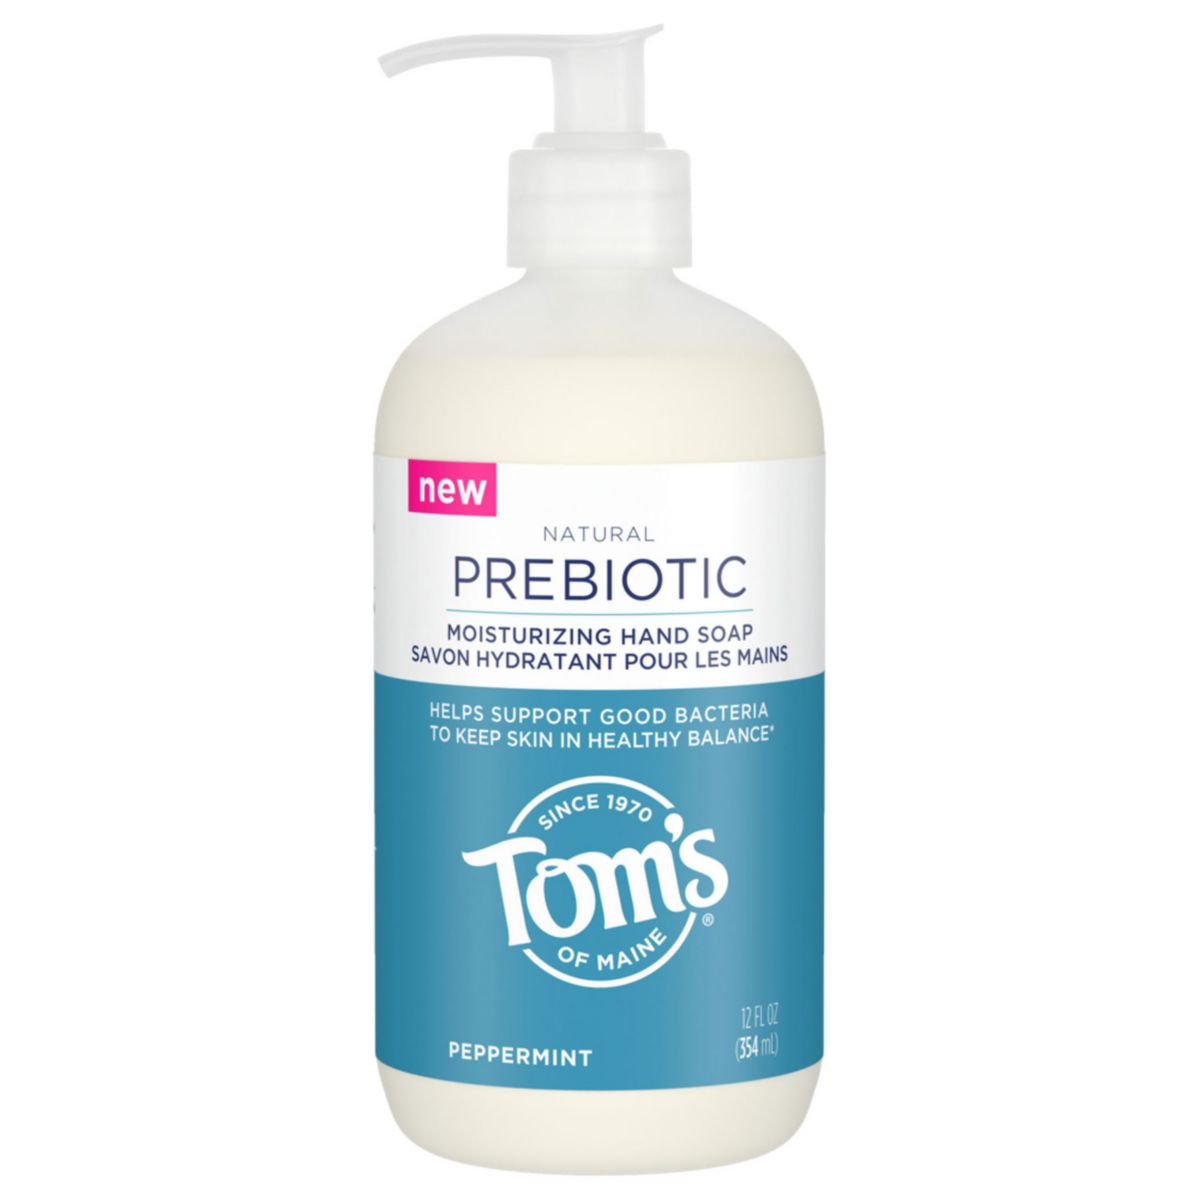 Tom's of Maine Prebiotic Moisturizing Natural Liquid Hand Soap, Peppermint 12-oz. Tom's of Maine